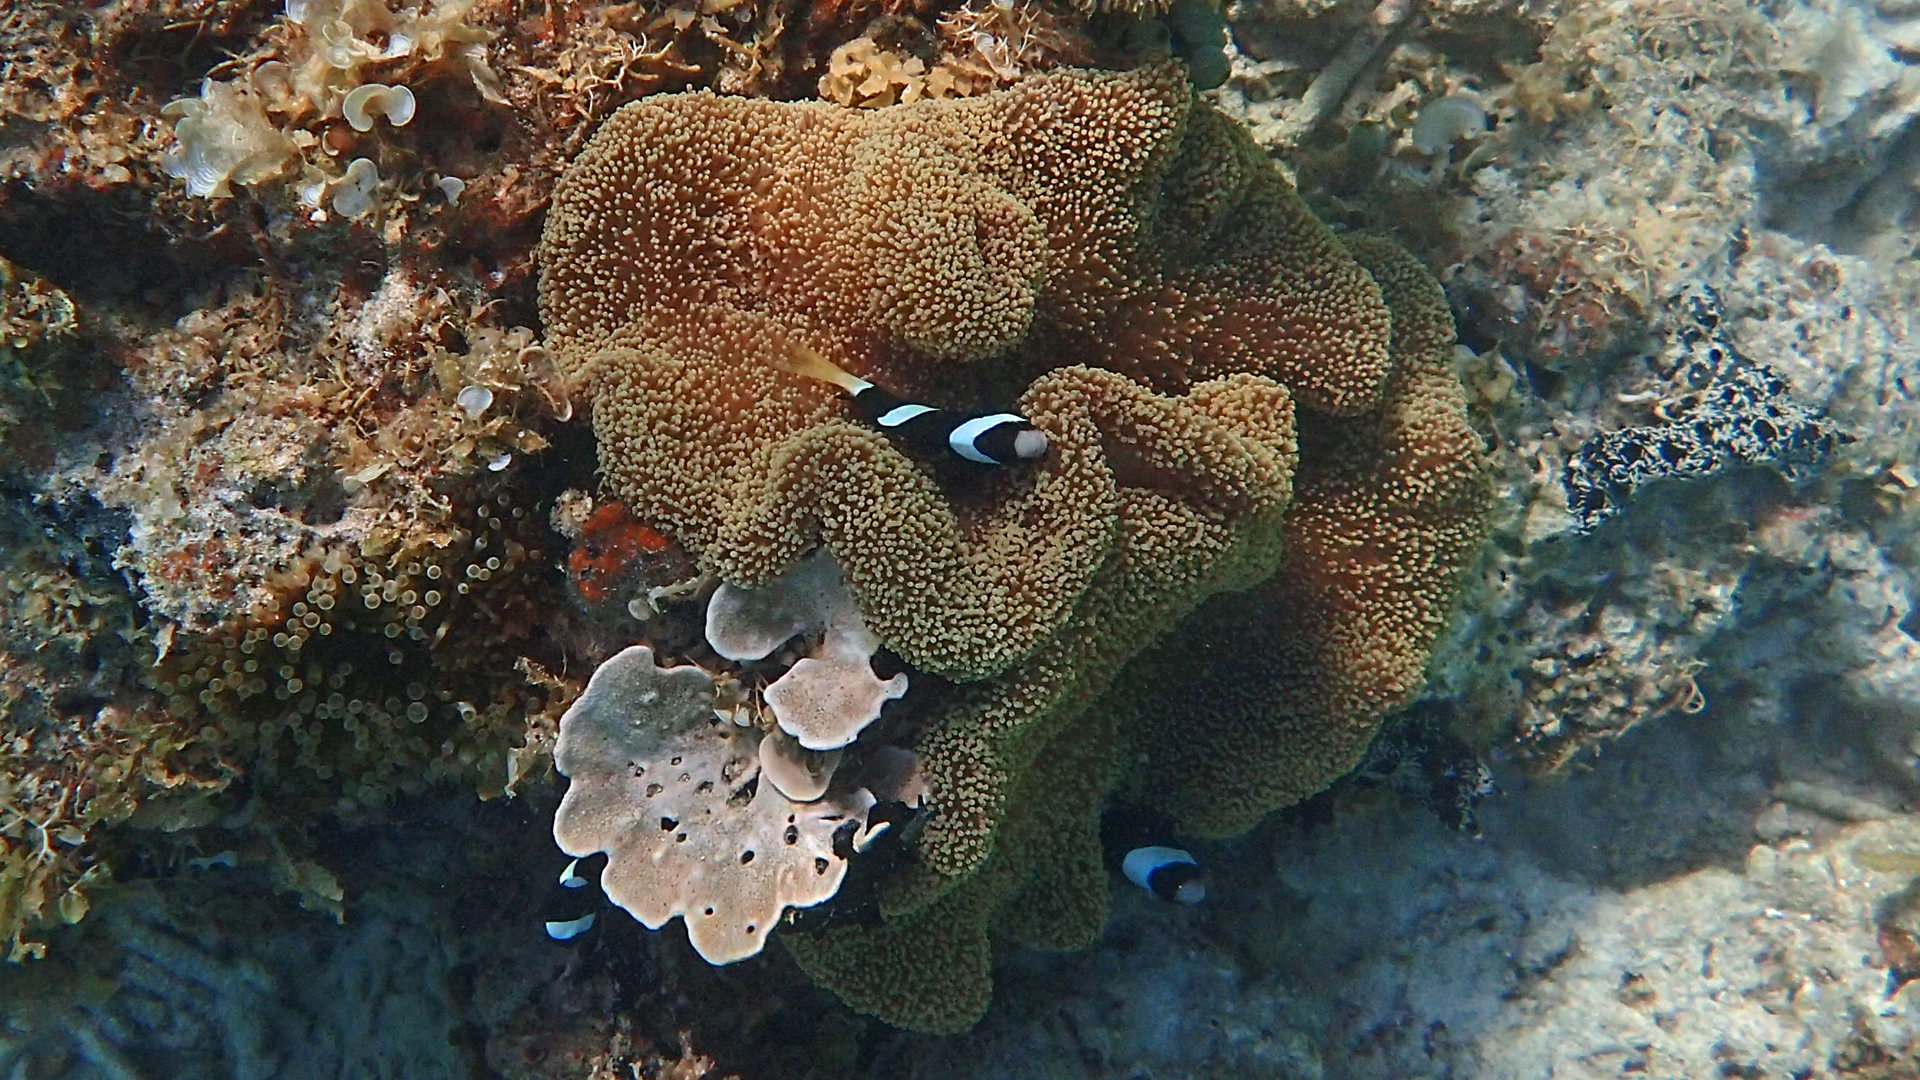 Amphiprion clarkii (Clark's clownfish) go between a Stichodactyla mertensii (Merten's carpet) and  a Entacmaea quadricolor (bubble anemone)